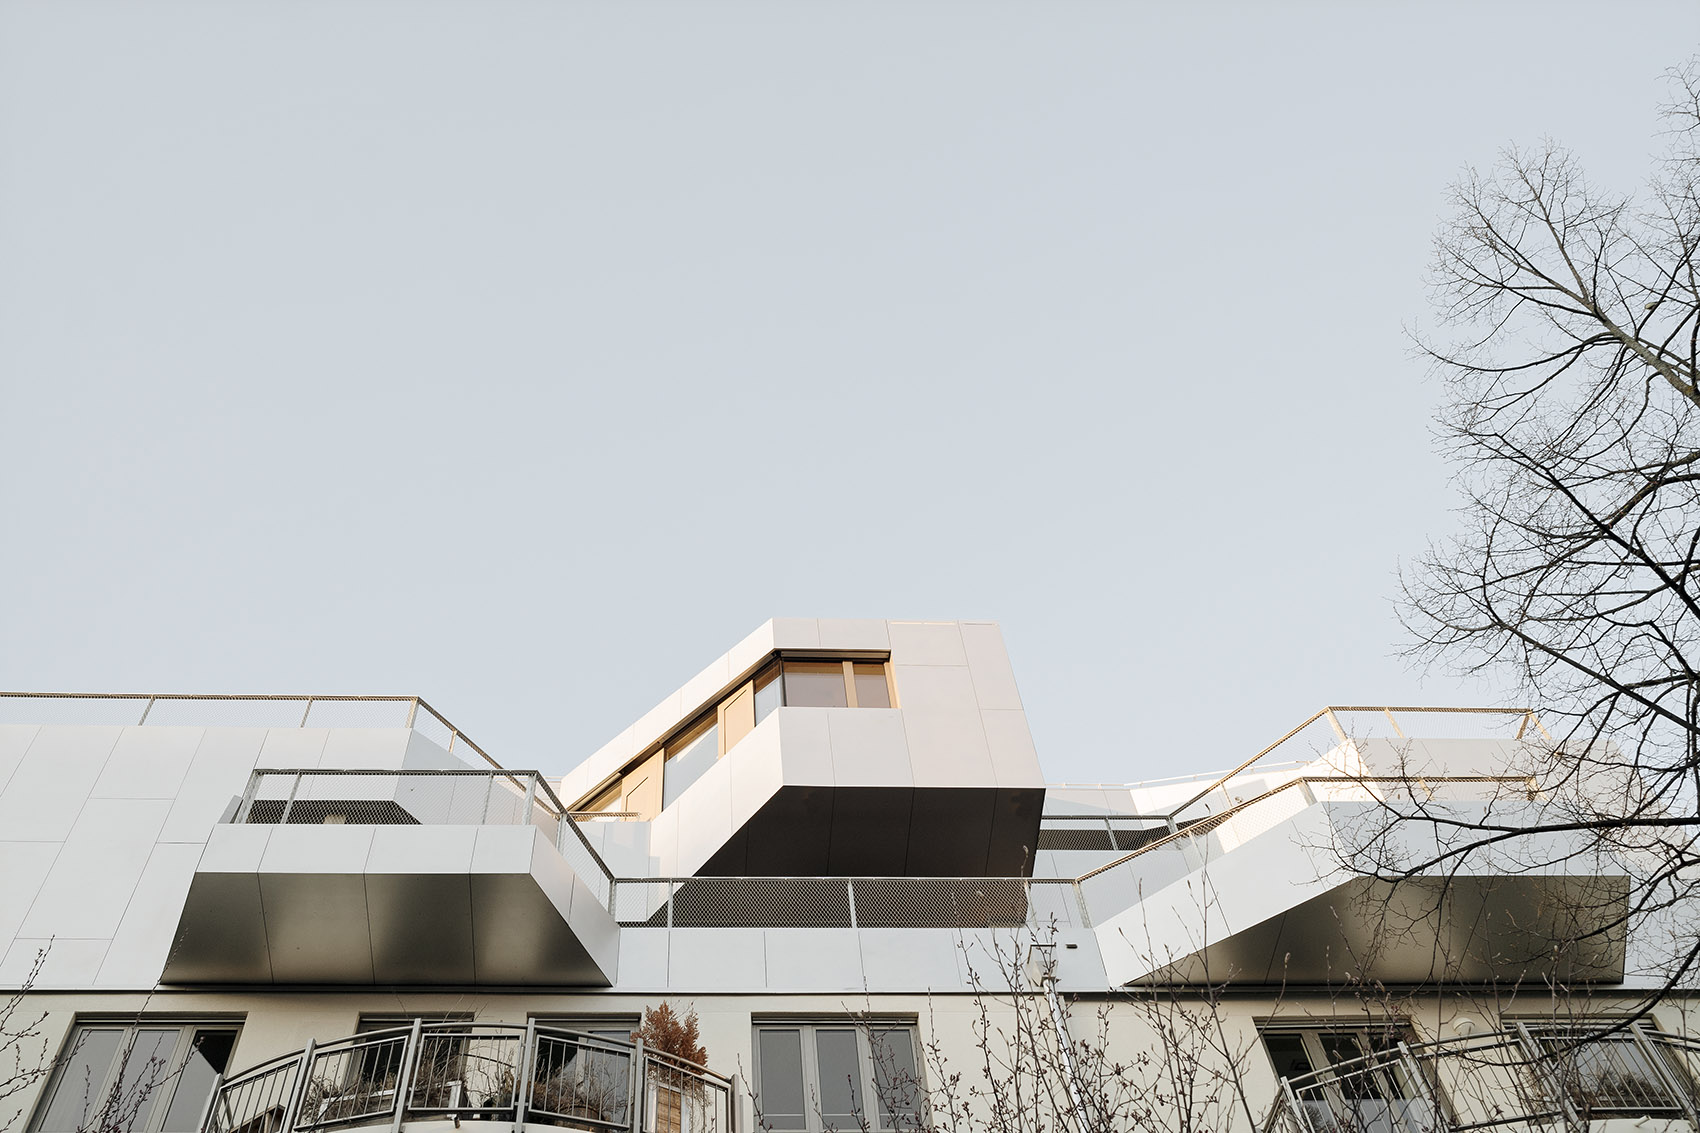 002-r11-roof-extension-maxvorstadt-by-pool-leber-architekten.jpg